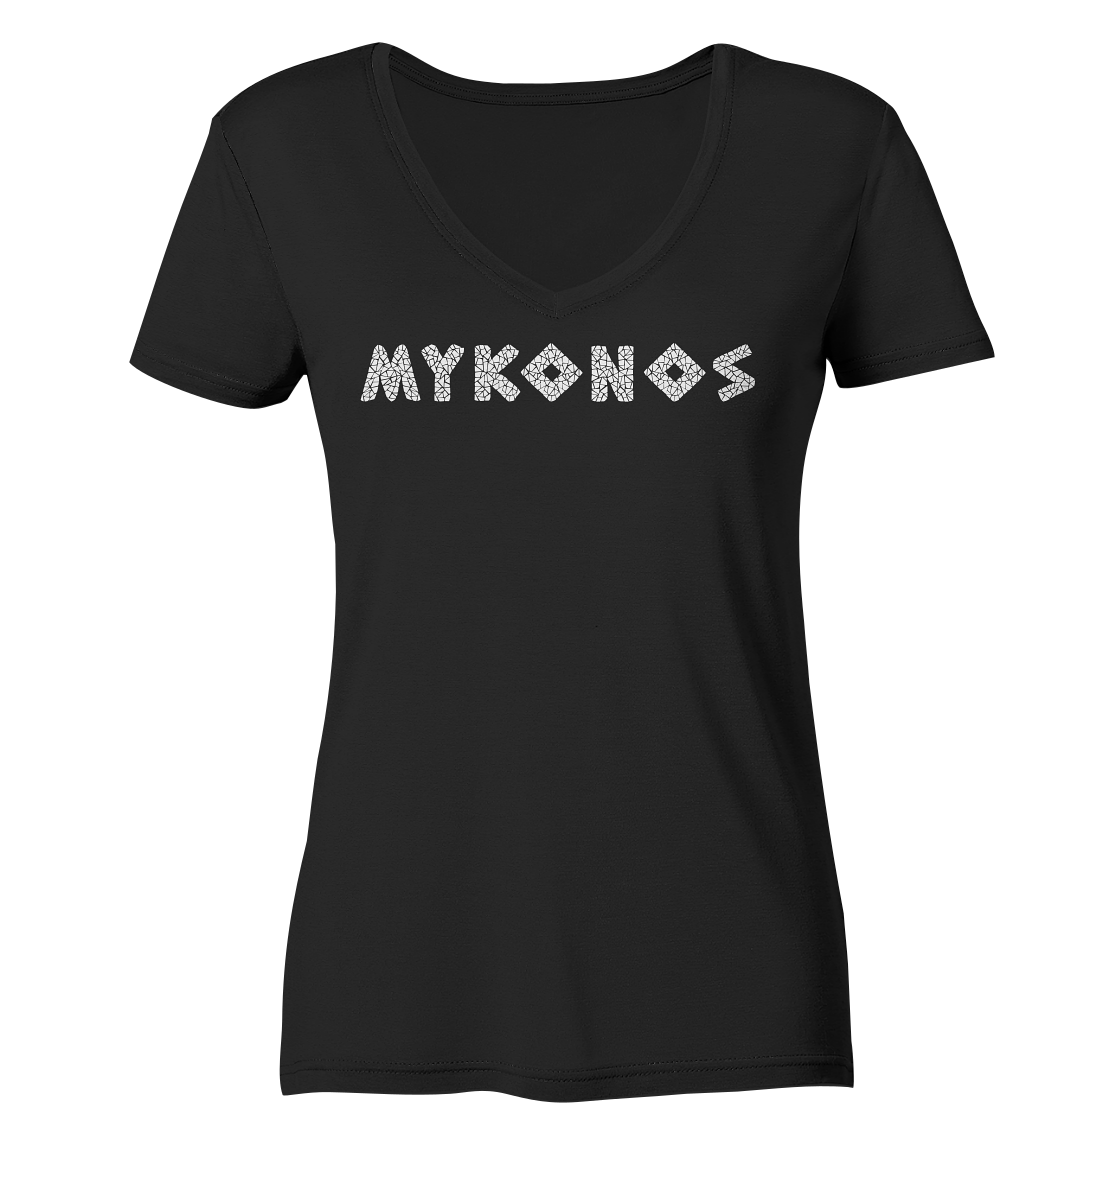 Mykonos Mosaic - Ladies Organic V-Neck Shirt